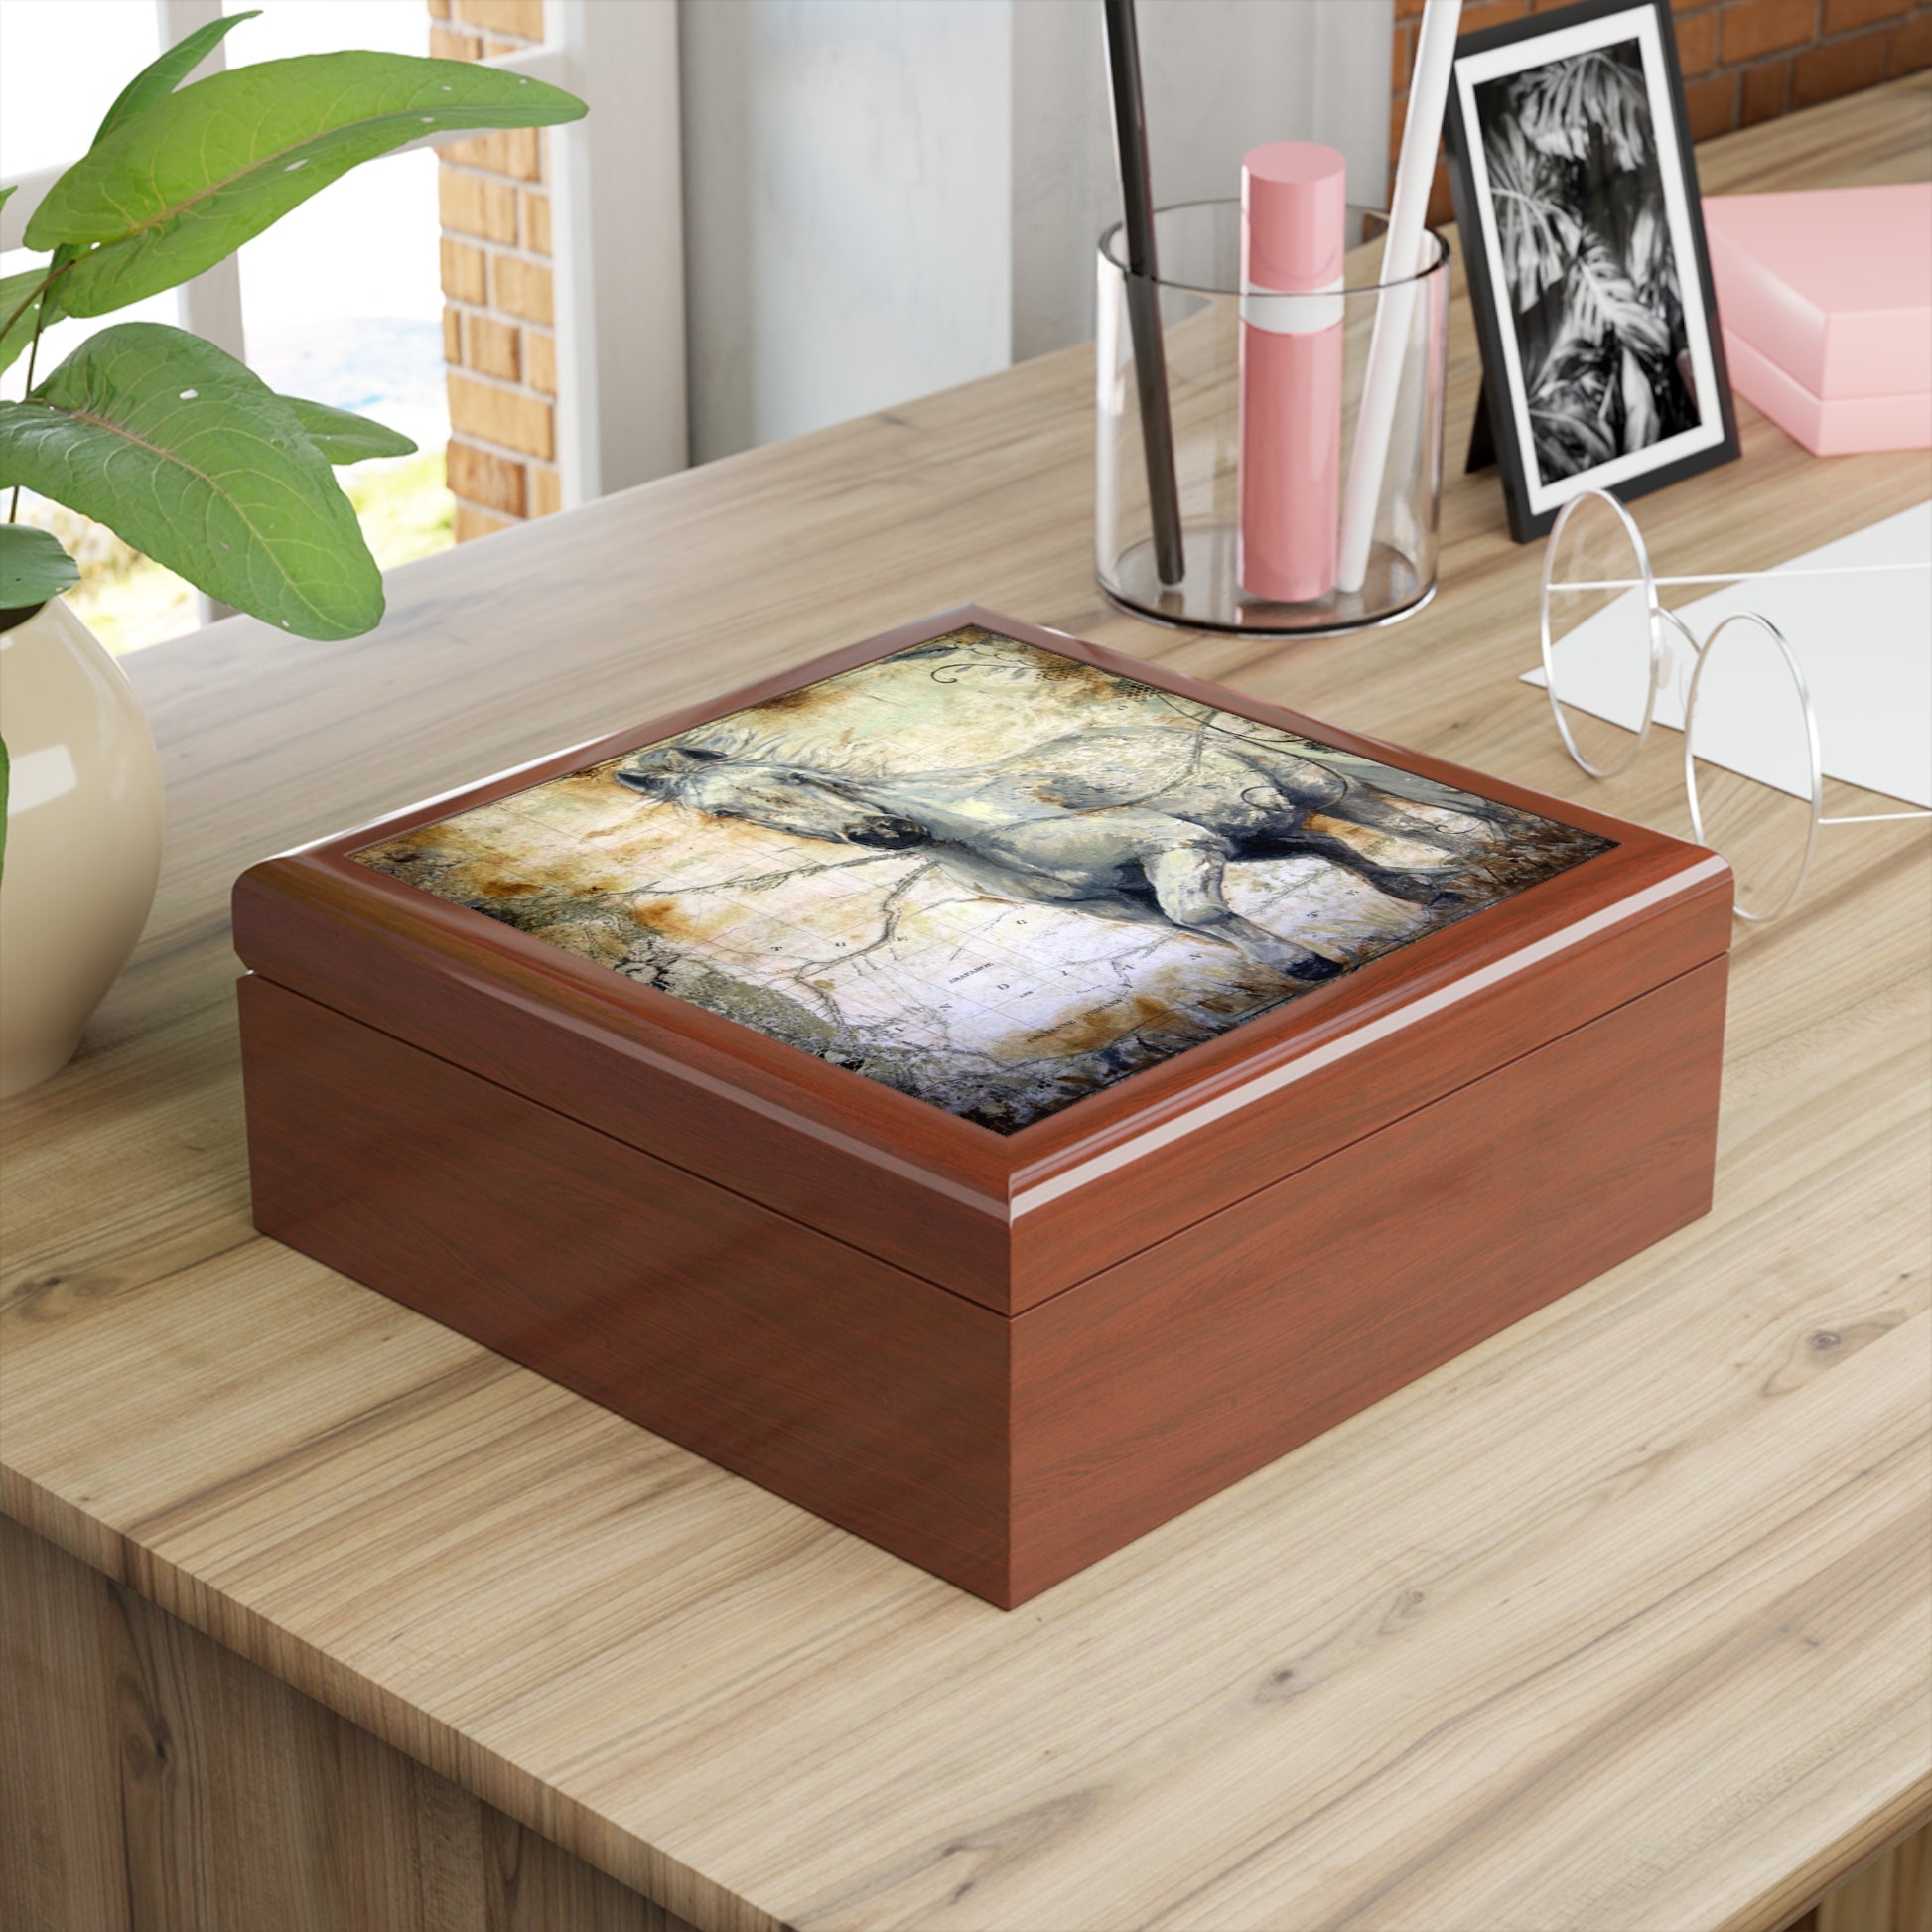 Jewelry / Keepsake Box - Horse Design -  Lacquered Wood Box Golden Oak box